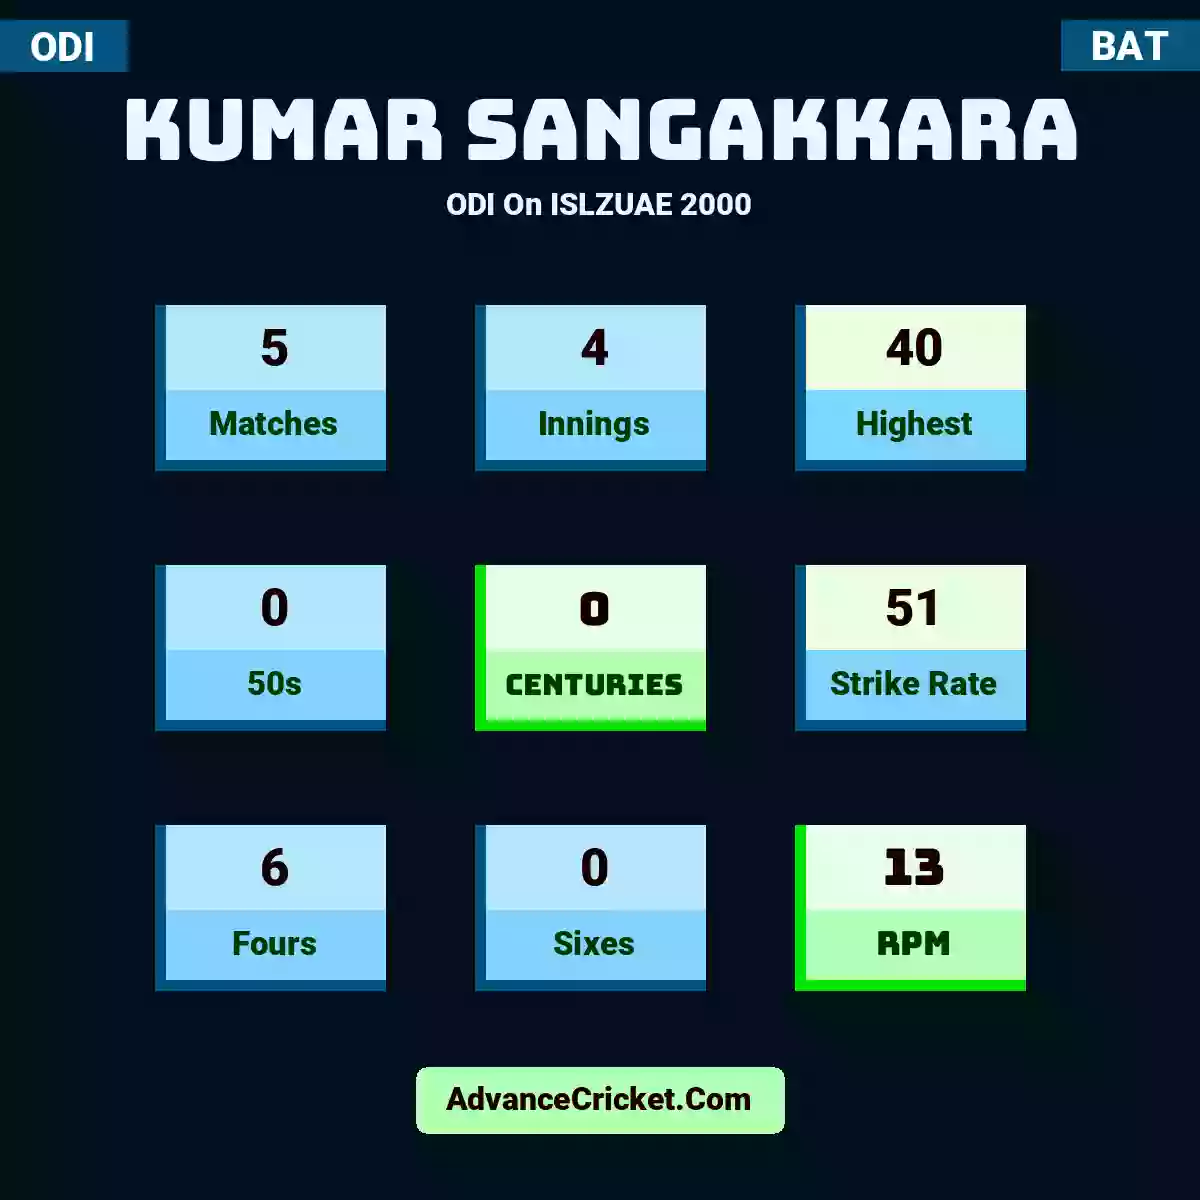 Kumar Sangakkara ODI  On ISLZUAE 2000, Kumar Sangakkara played 5 matches, scored 40 runs as highest, 0 half-centuries, and 0 centuries, with a strike rate of 51. K.Sangakkara hit 6 fours and 0 sixes, with an RPM of 13.